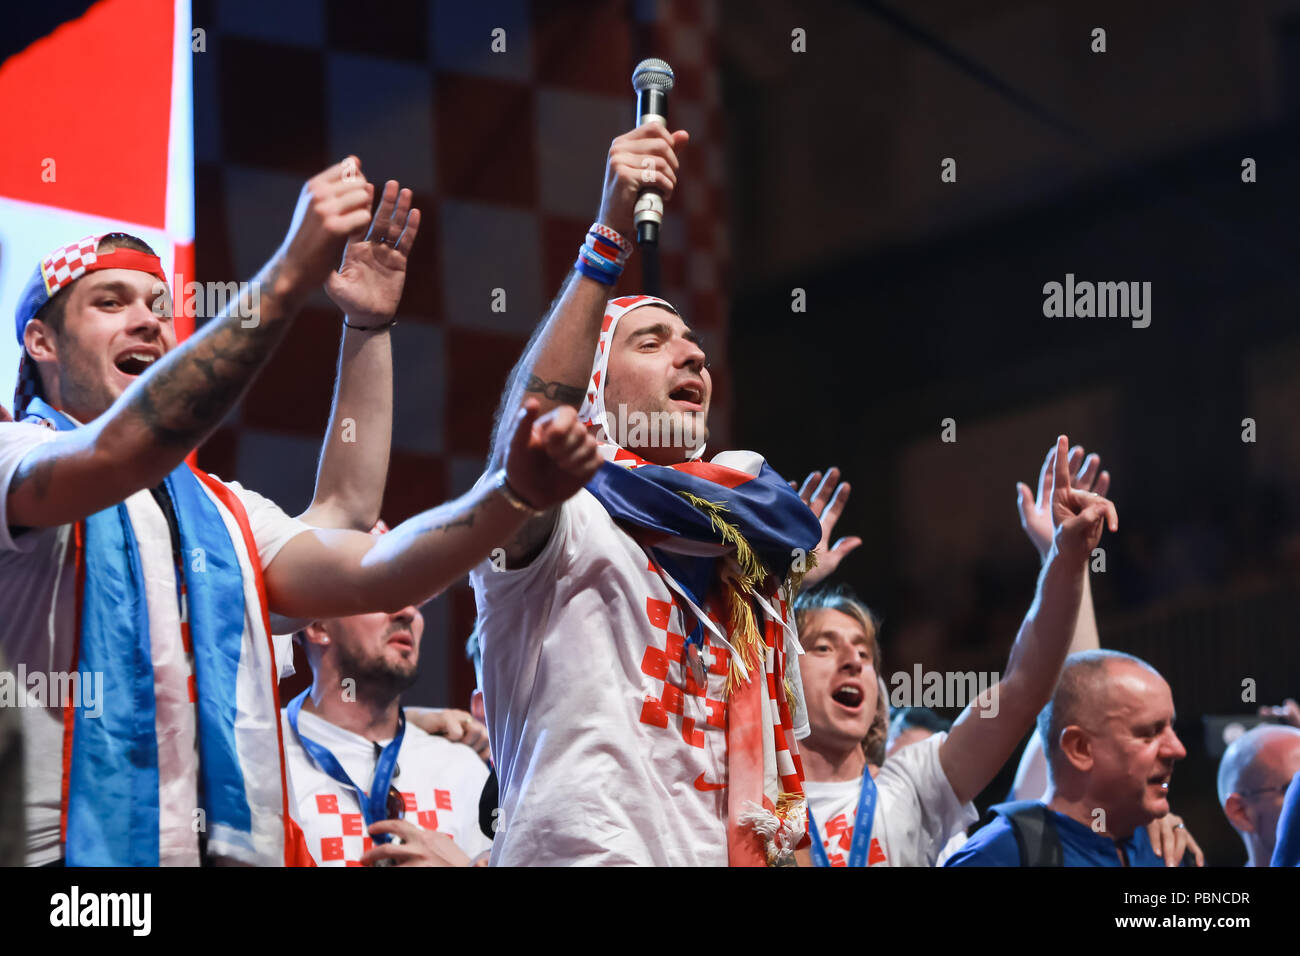 ZAGREB, CROATIA - JULY 16, 2018 : Croatia National Football Team welcome home celebration - Duje Caleta Car, Vedran Corluka, Luka Modric celebrating o Stock Photo